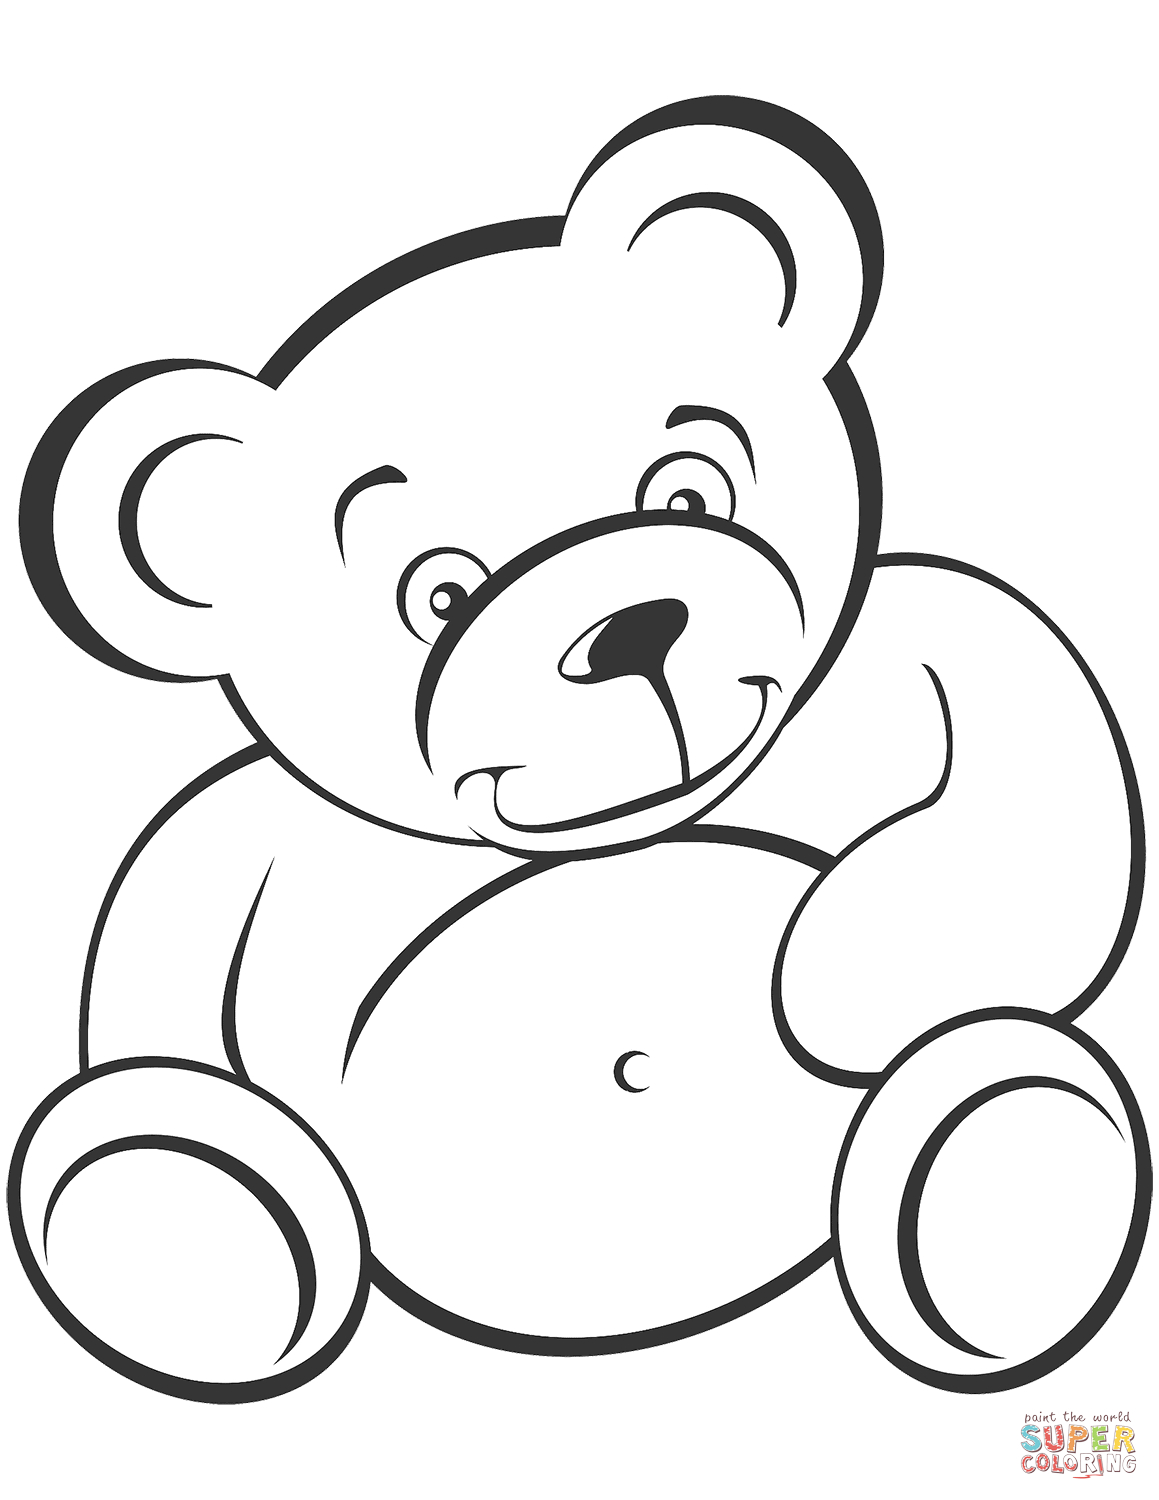 Ausmalbild: Teddybär | Ausmalbilder Kostenlos Zum Ausdrucken über Teddybär Ausmalbild